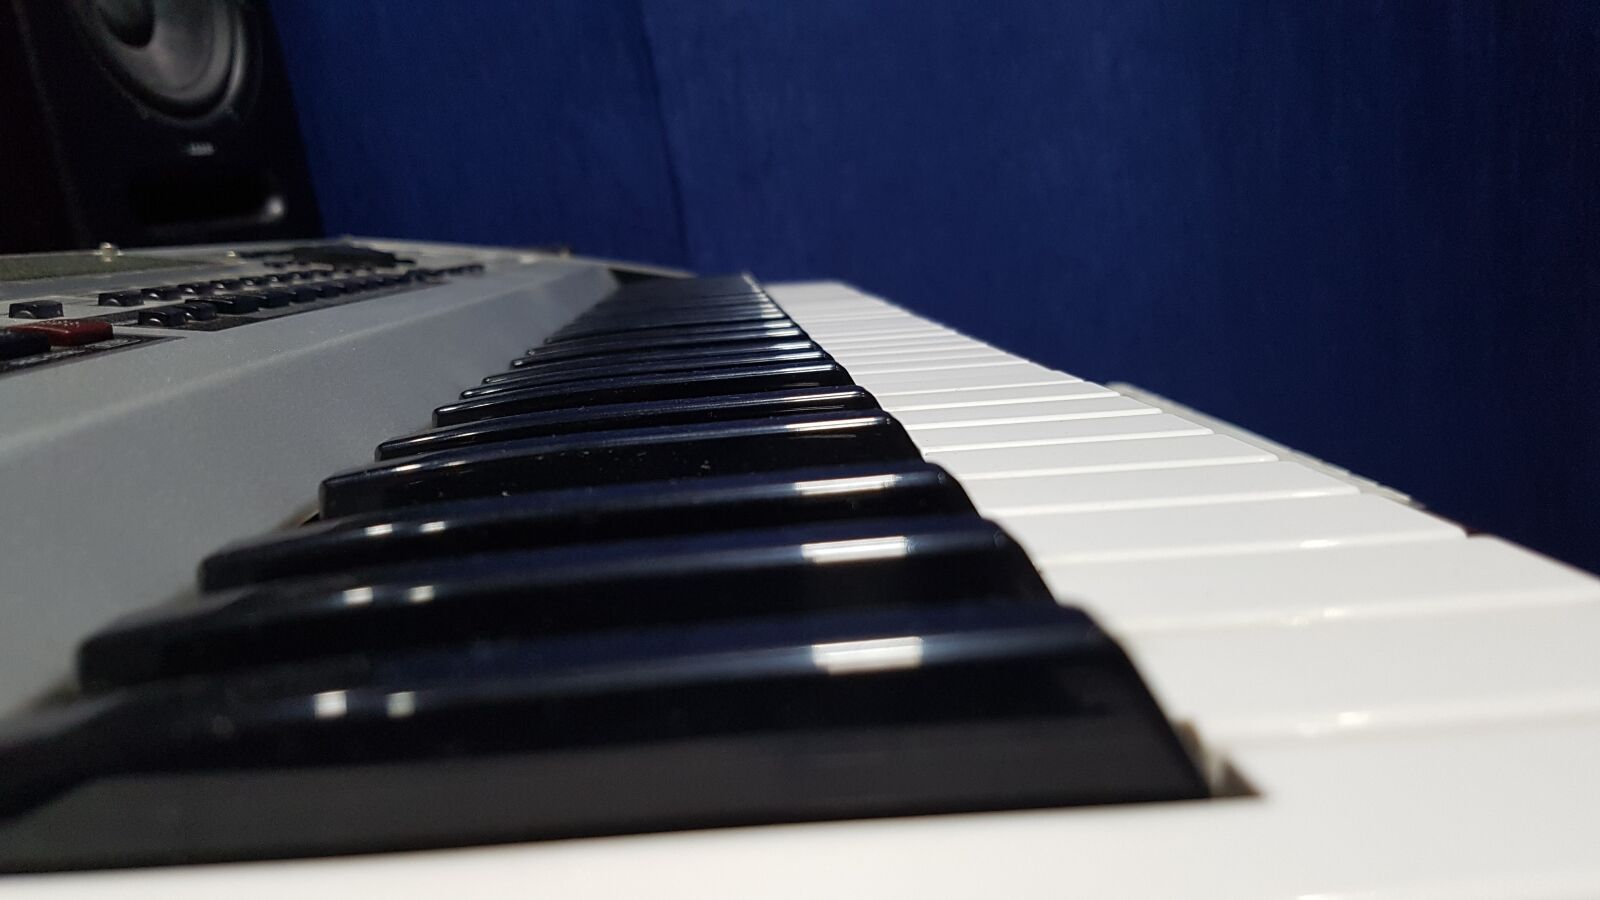 Samsung Galaxy S7 sample photo. Keyboard, piano, instrument photography